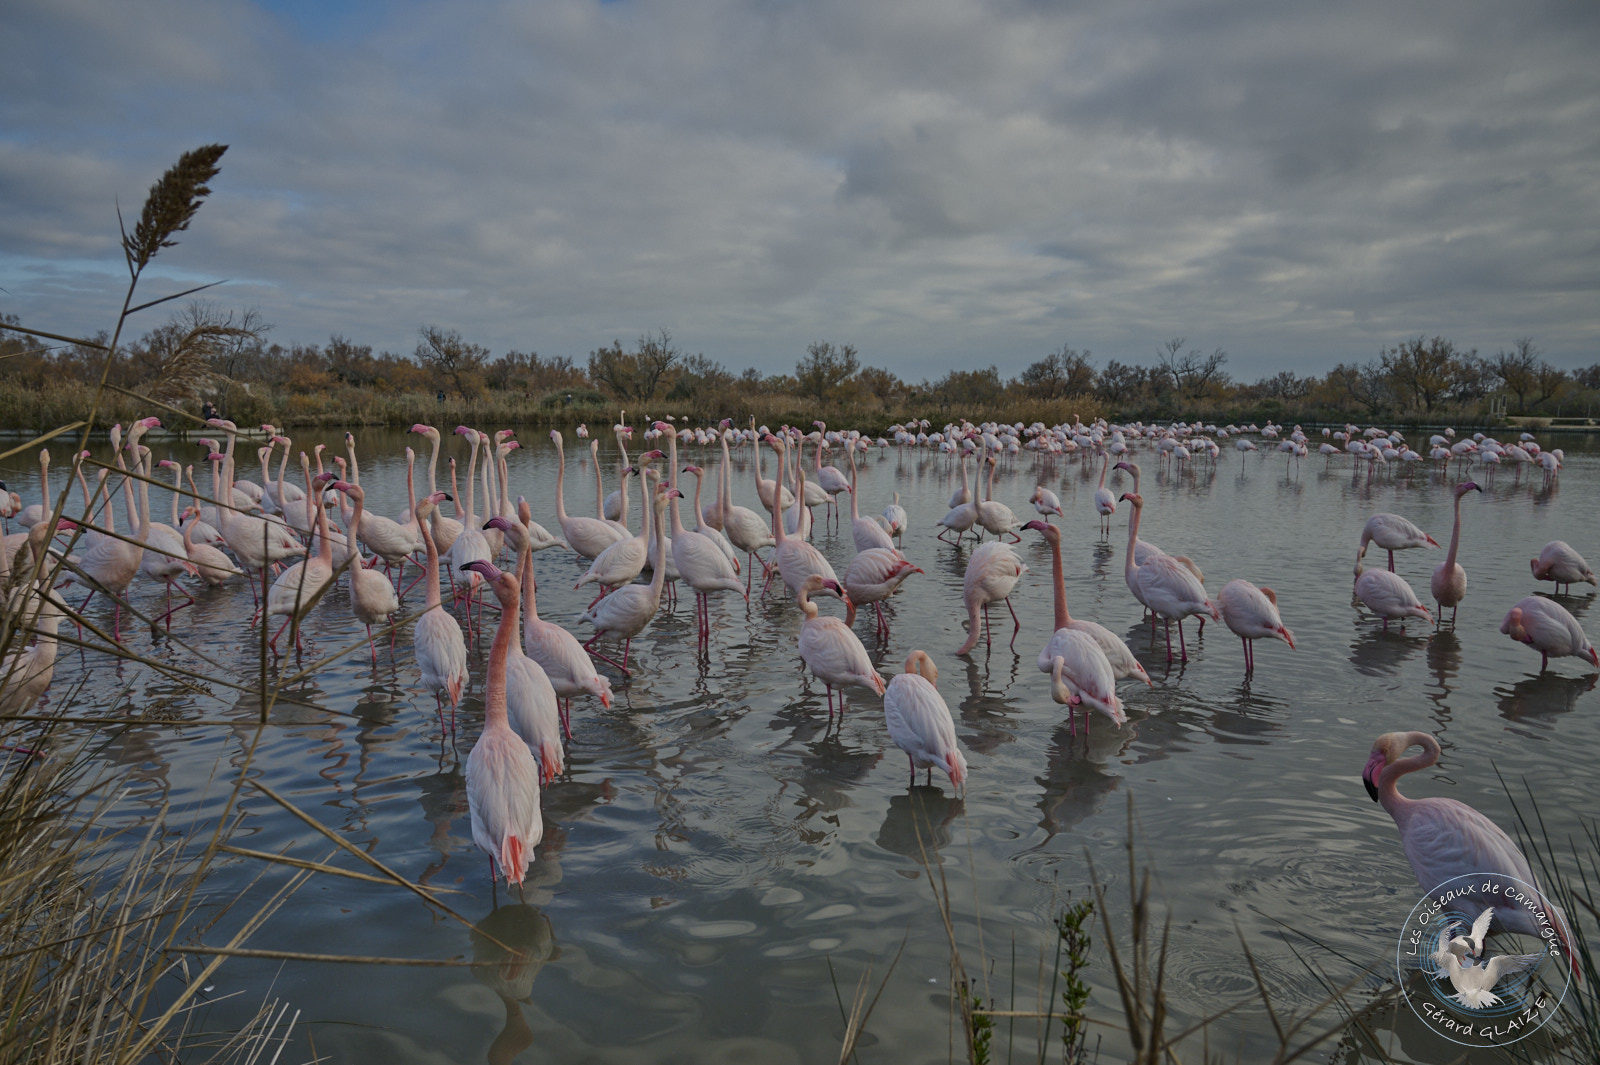 Flamants roses - Greater Flamingos